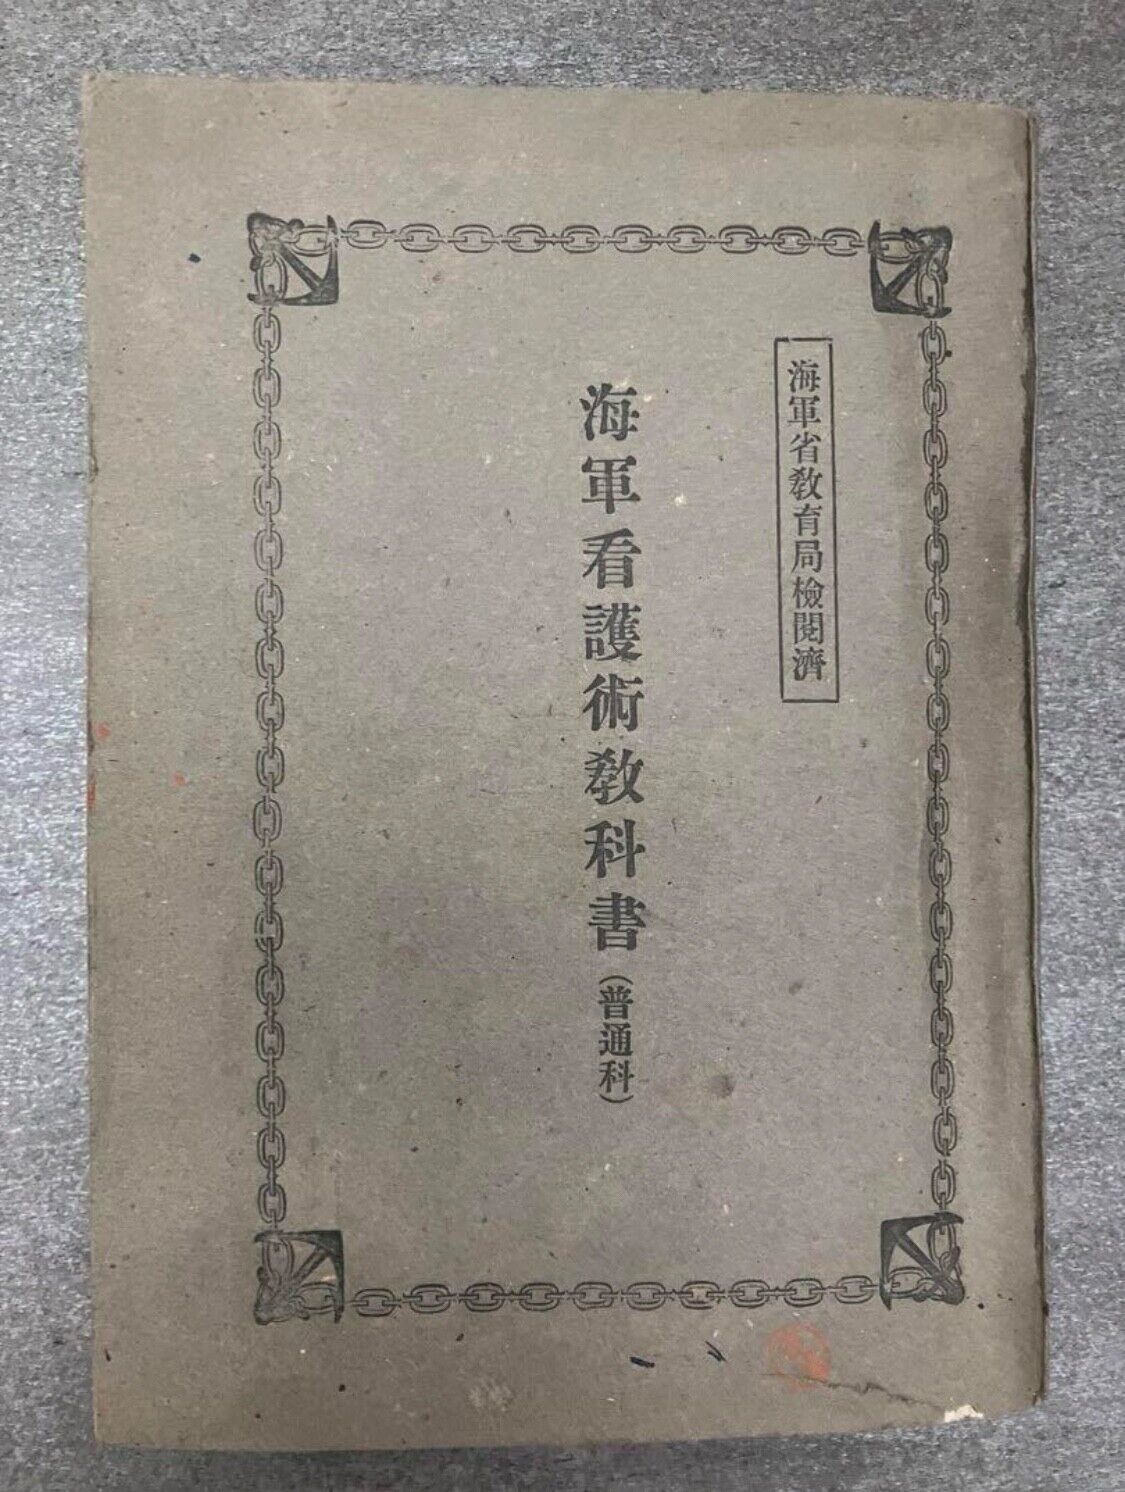 World War II Imperial Japanese Navy Nursing Textbook, 1940 Edition